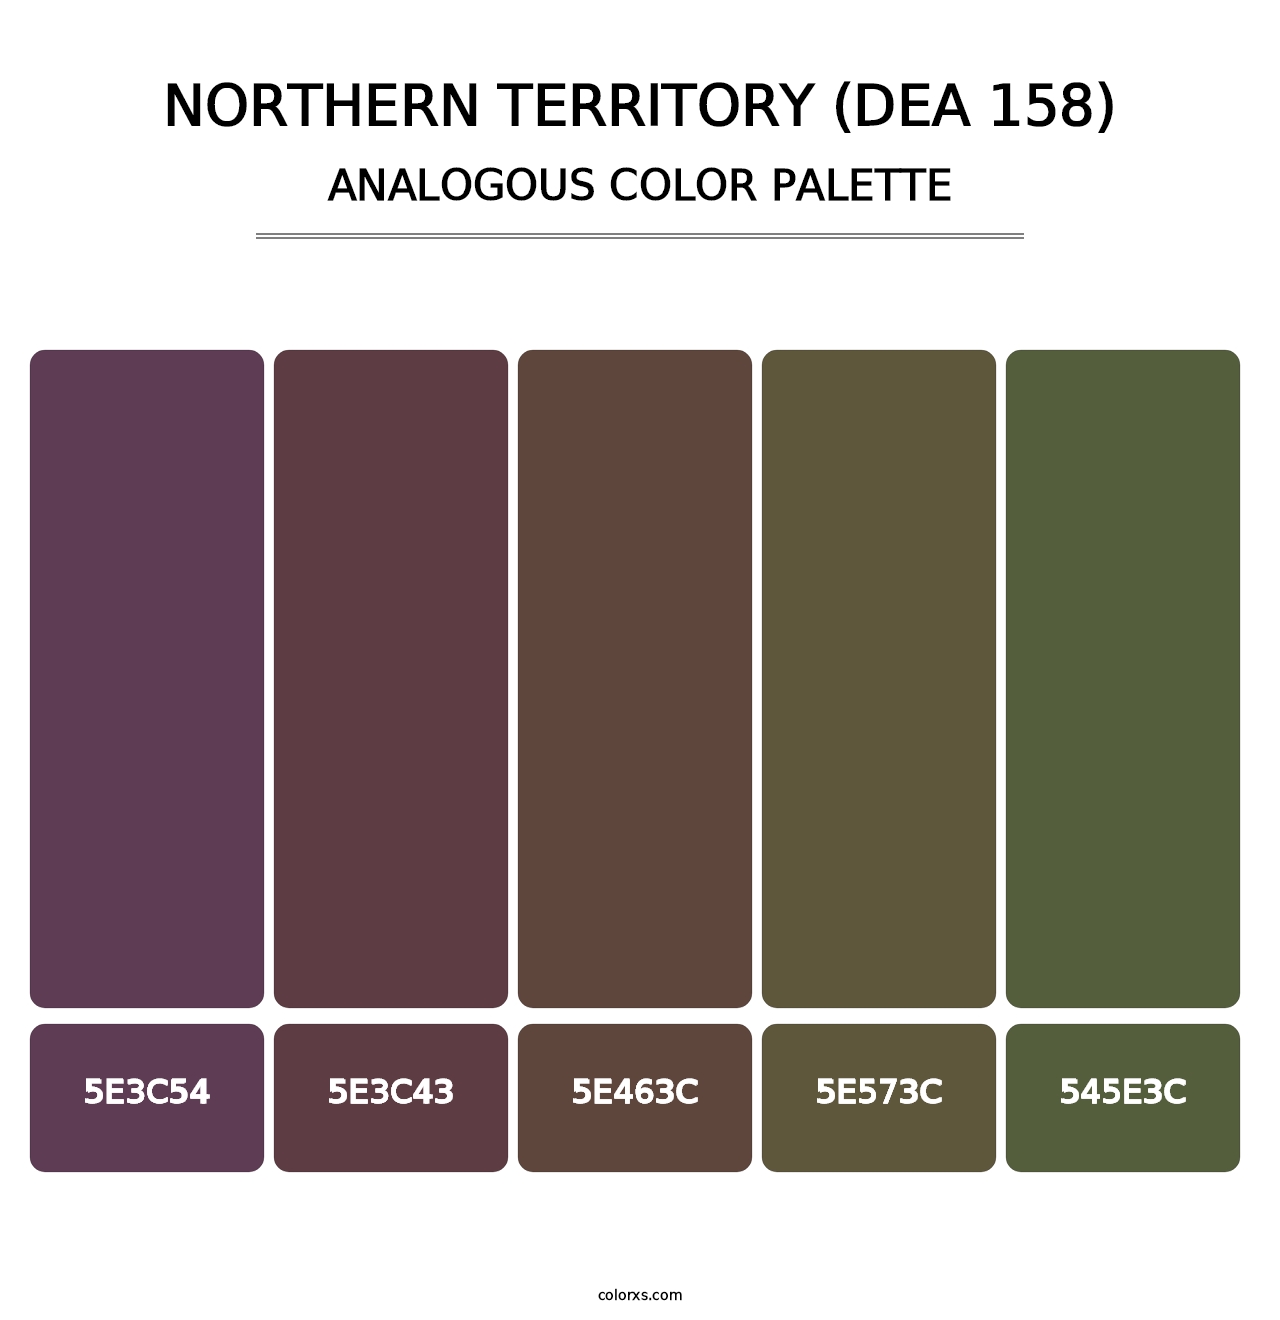 Northern Territory (DEA 158) - Analogous Color Palette